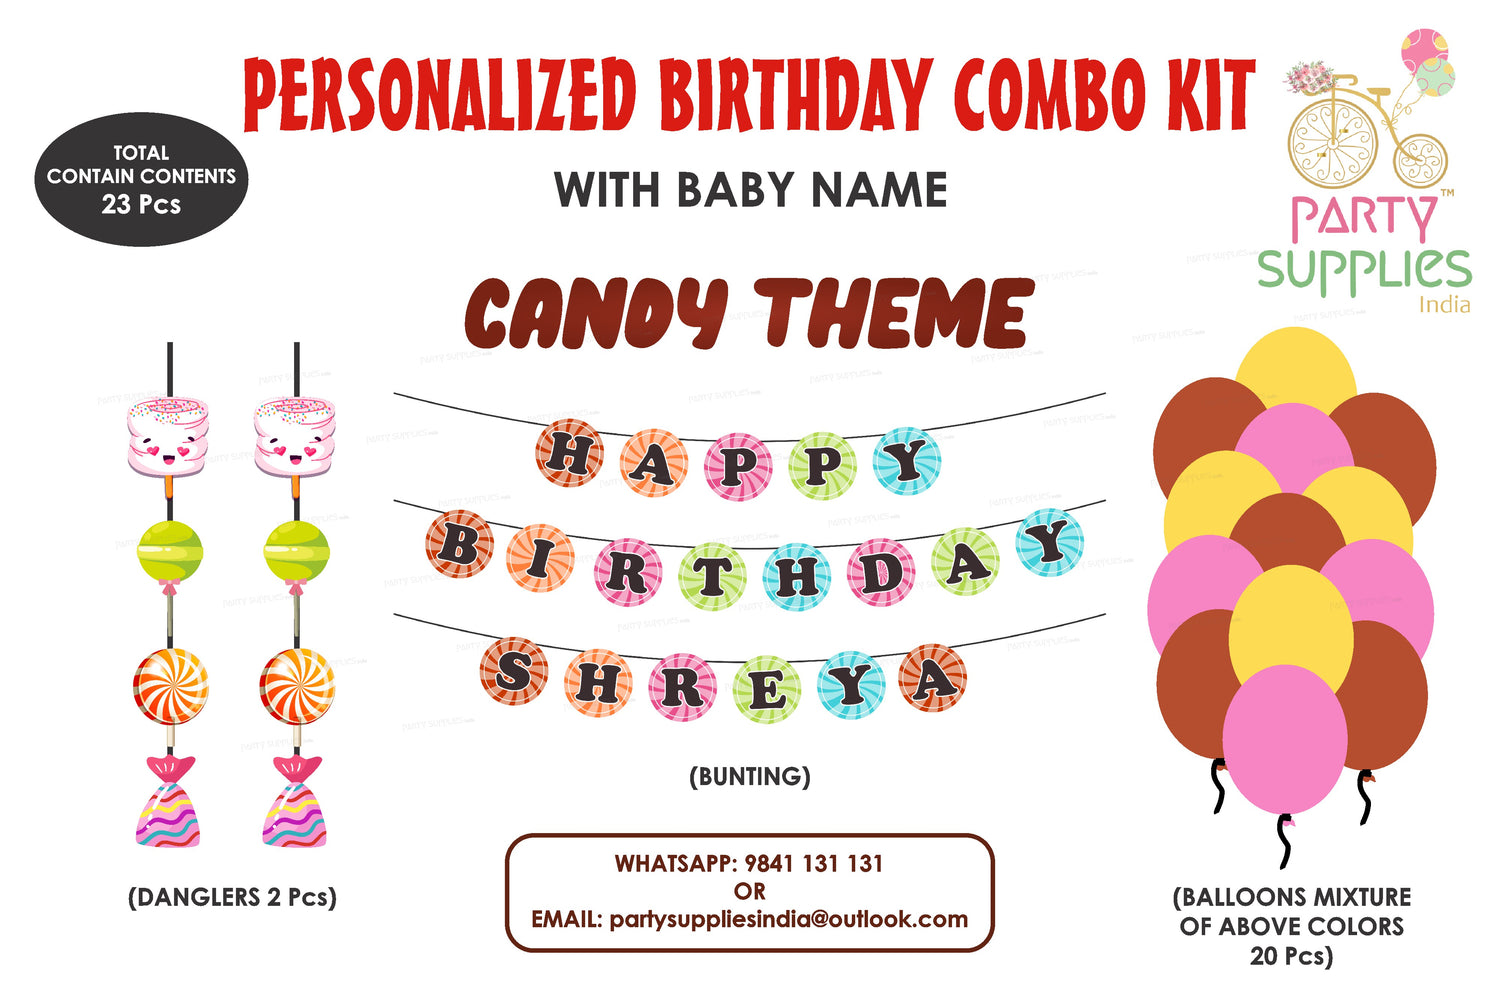 PSI Candy Theme Basic Kit